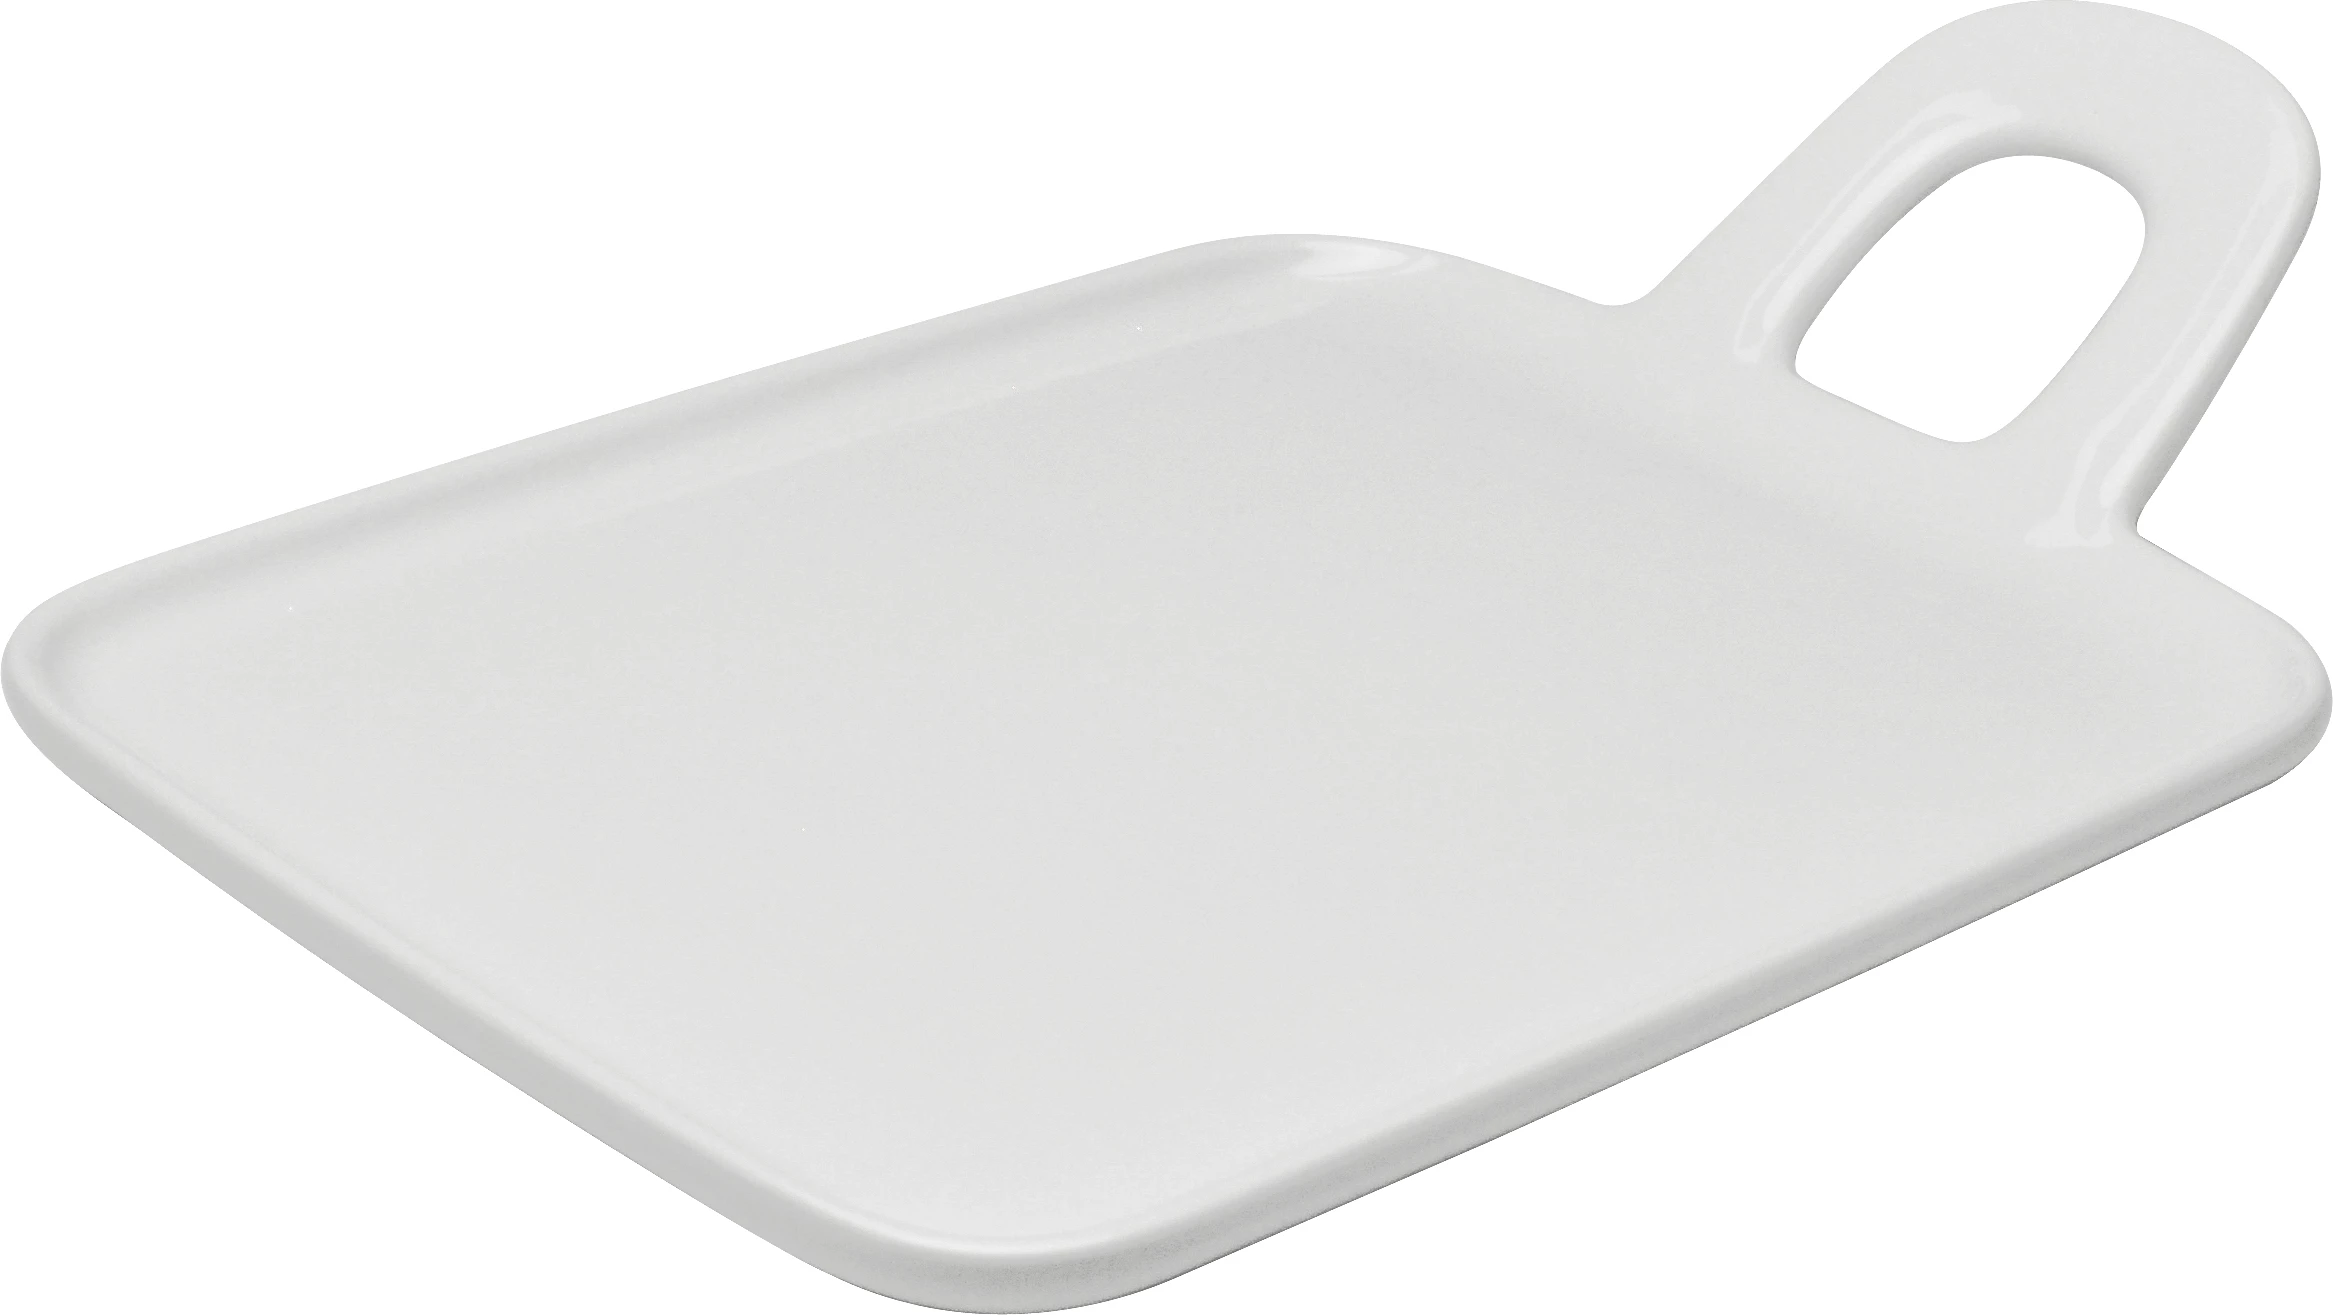 Figgjo Base flad tallerken med håndtag, 28 x 18 cm